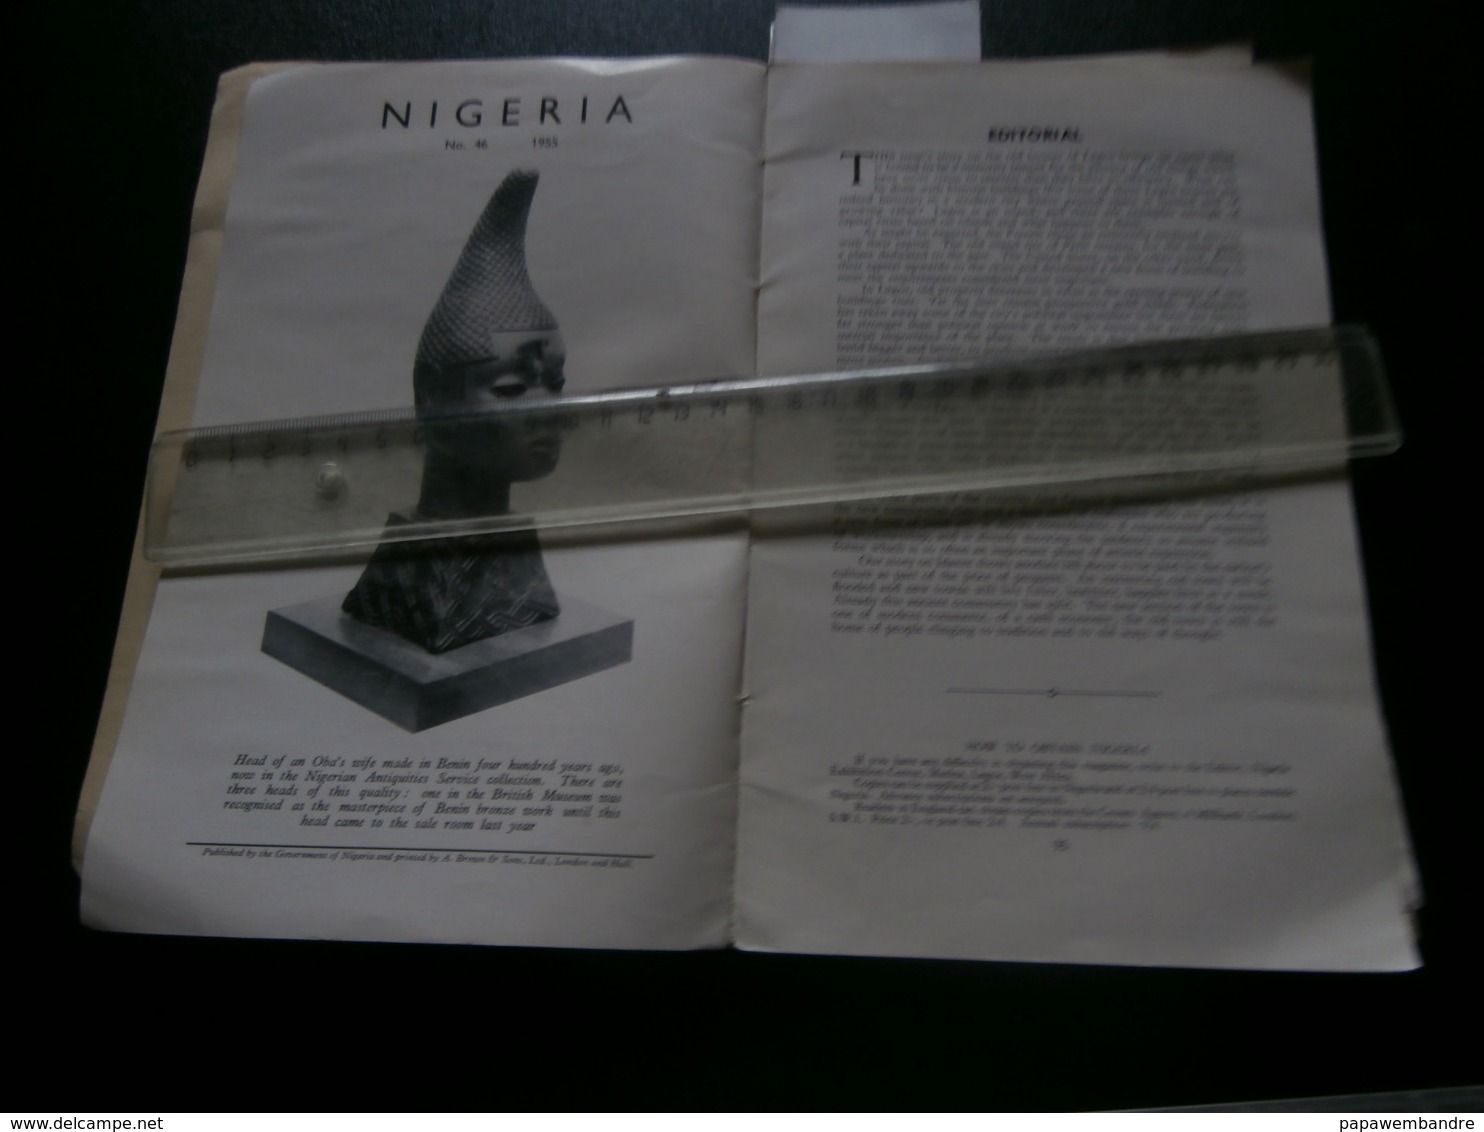 Nigeria 46 (1955) Lagos, Yoruba, Iseyin, Idanre, Ulli Beier, C B Dodwell, Murray - Histoire